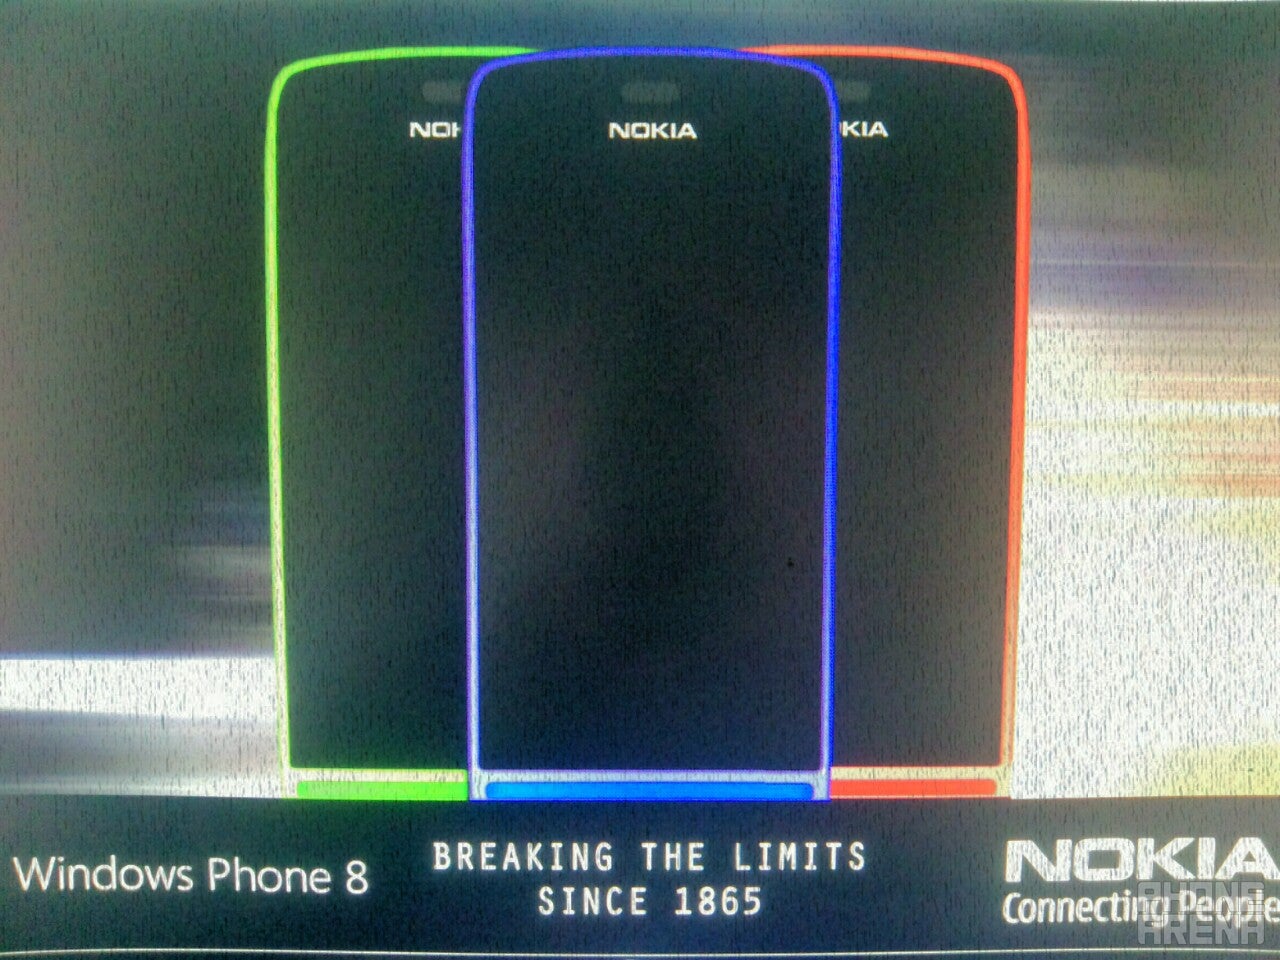 Alleged Nokia poster template reveals Windows Phone 8 branding